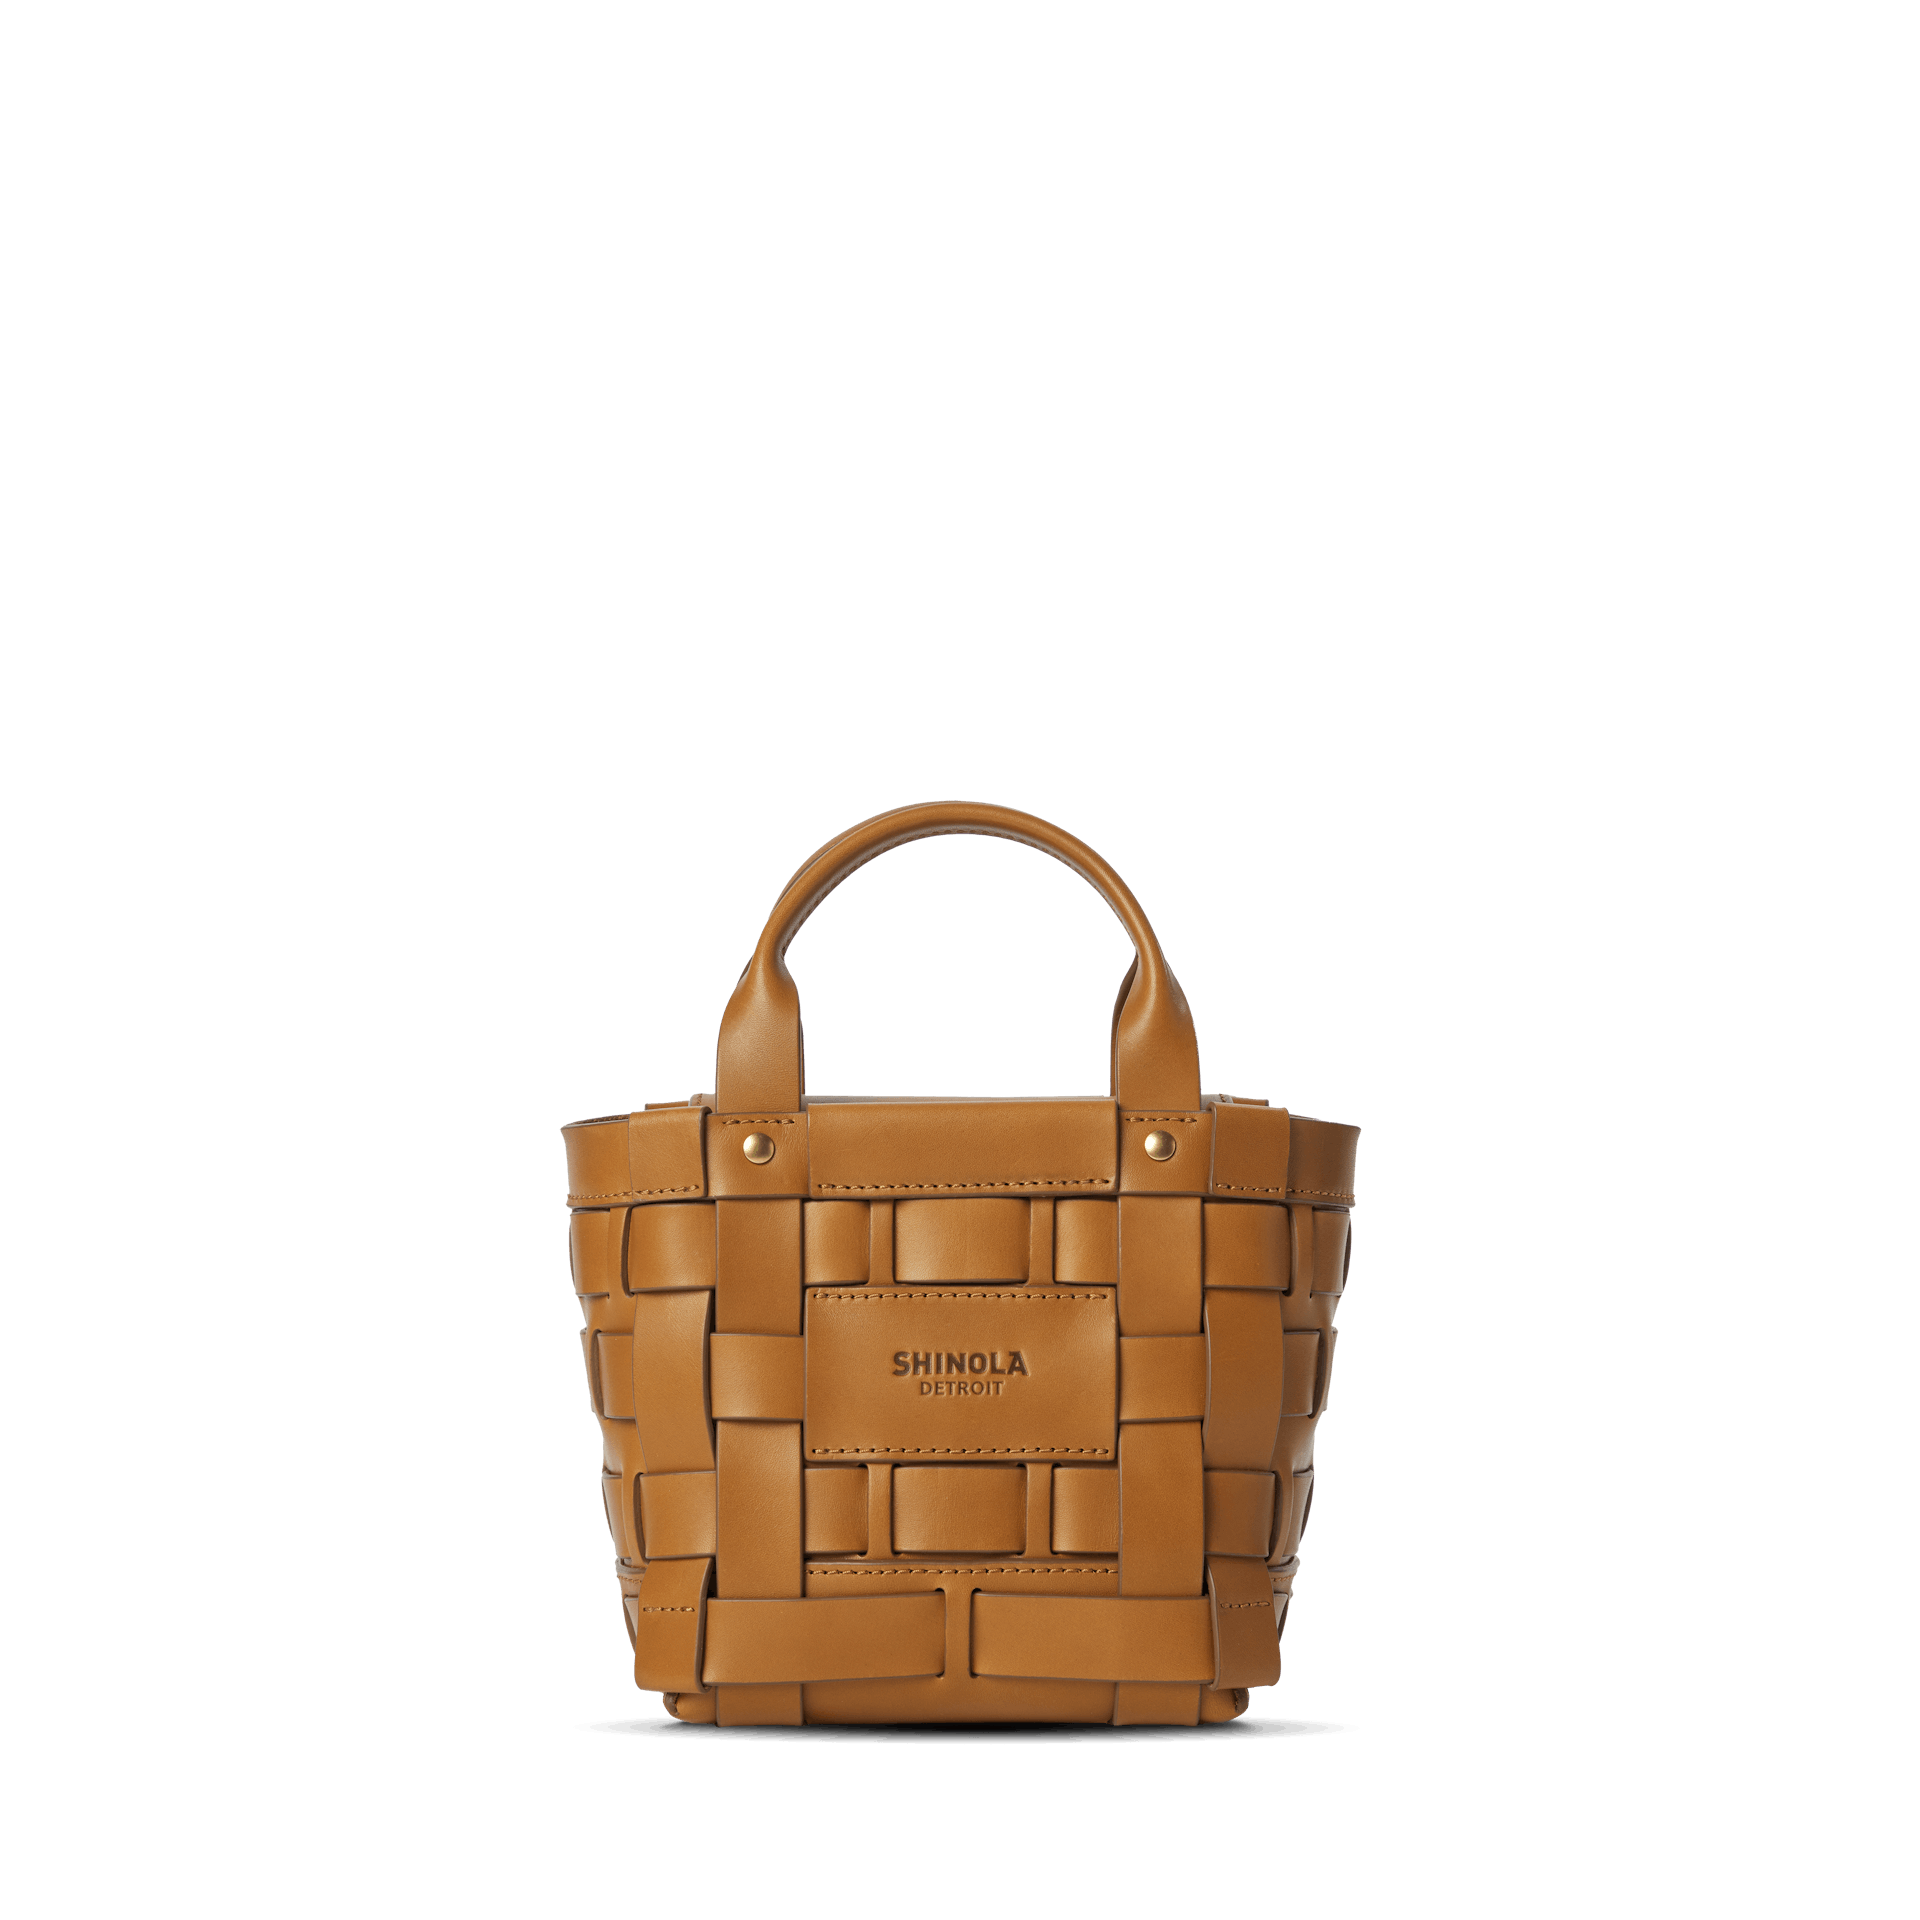 Del Giudice Roma | Handmade Italian Leather Goods